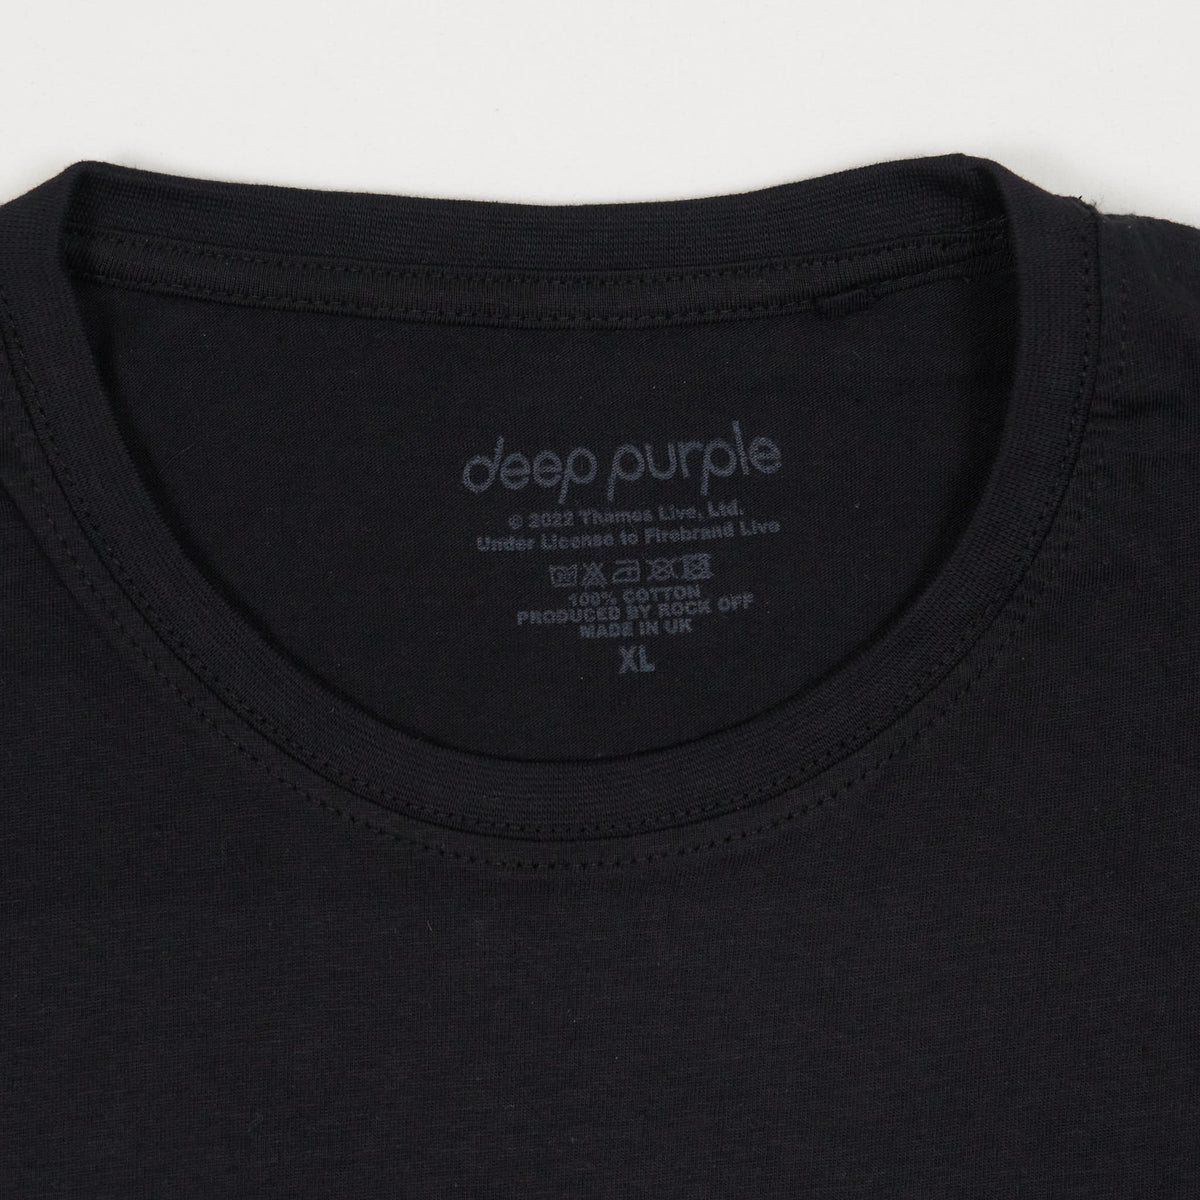 Deep Purple Speed King Rock Crew Neck T-Shirt